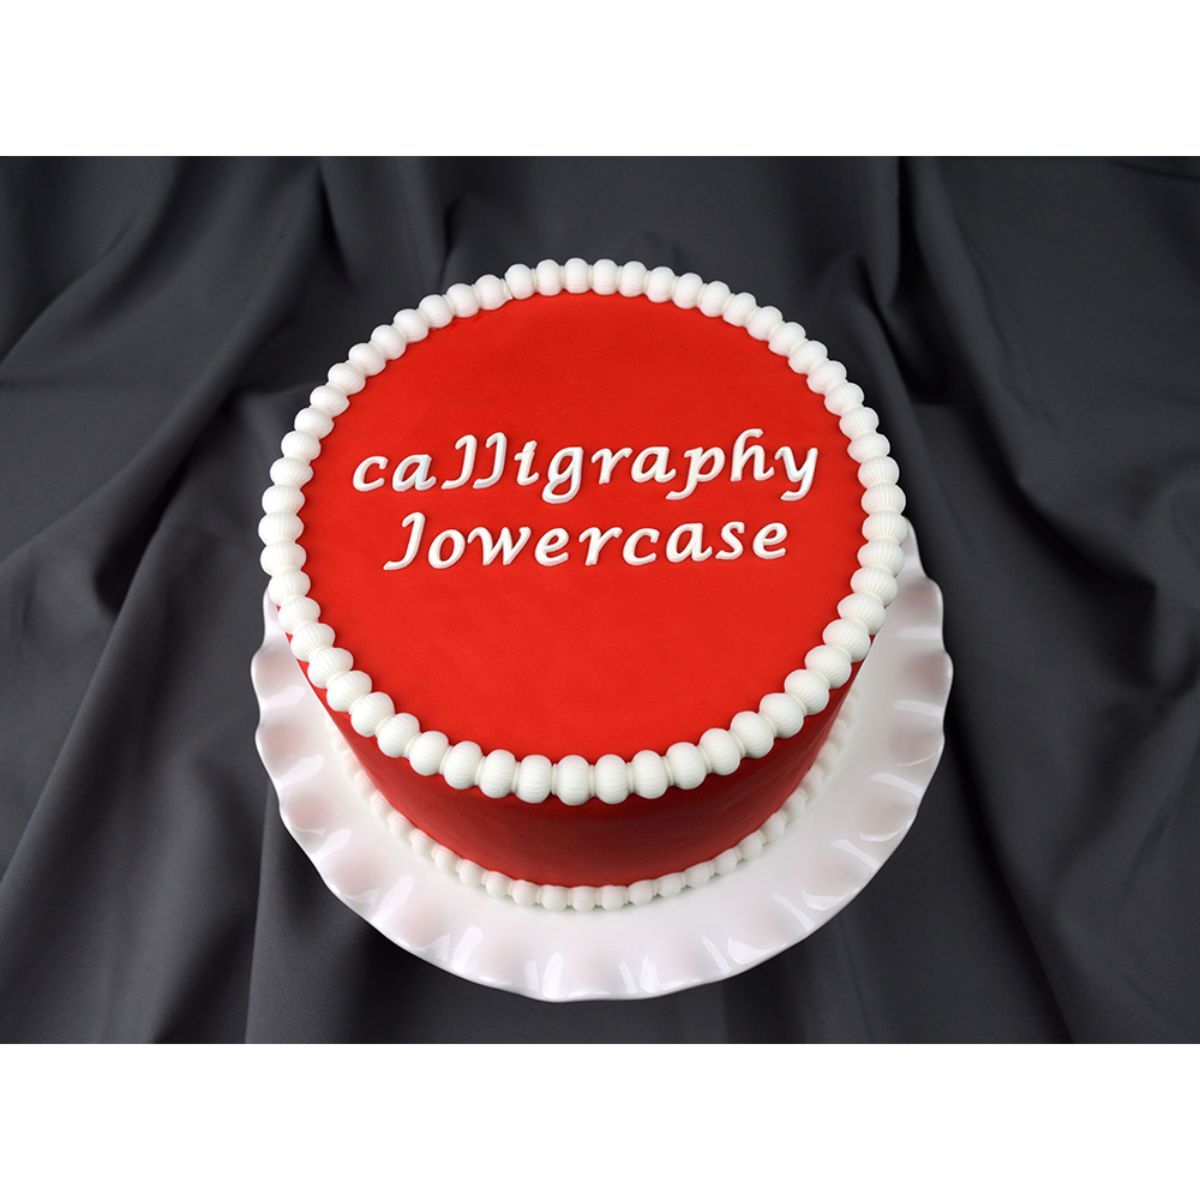 Calligraphy Lowercase Flexabet™ Mold - Bake Supply Plus